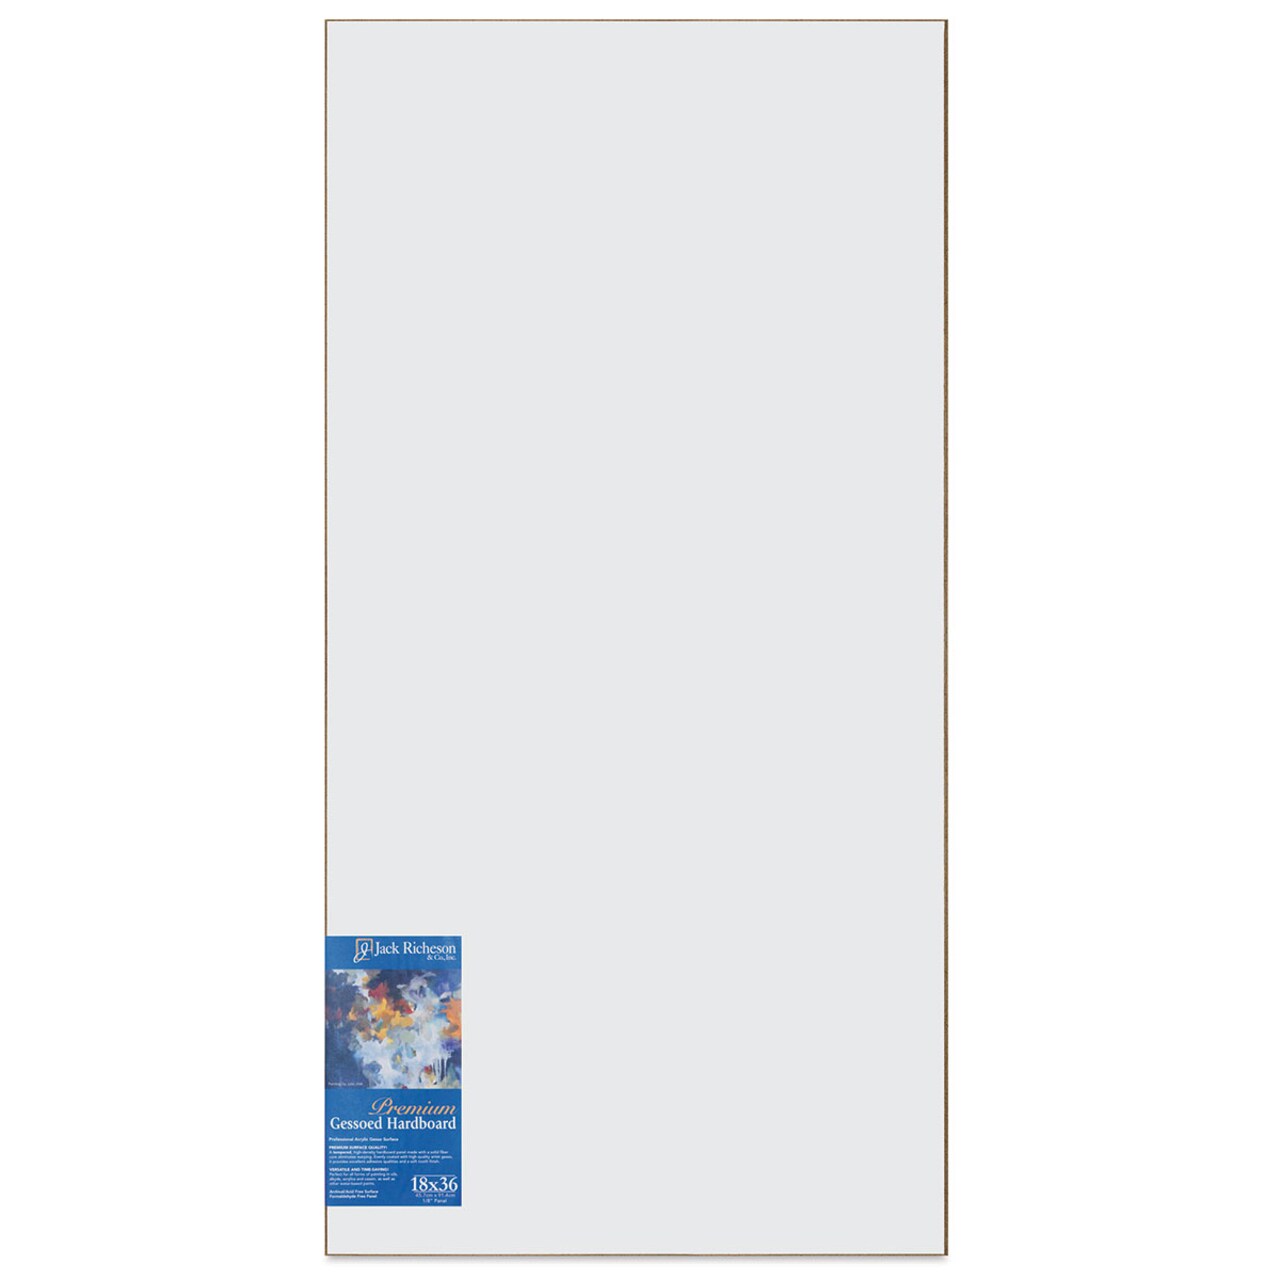 Richeson Toned Gessoed Hardboard Panel - 18 x 36, White, Flat Panel